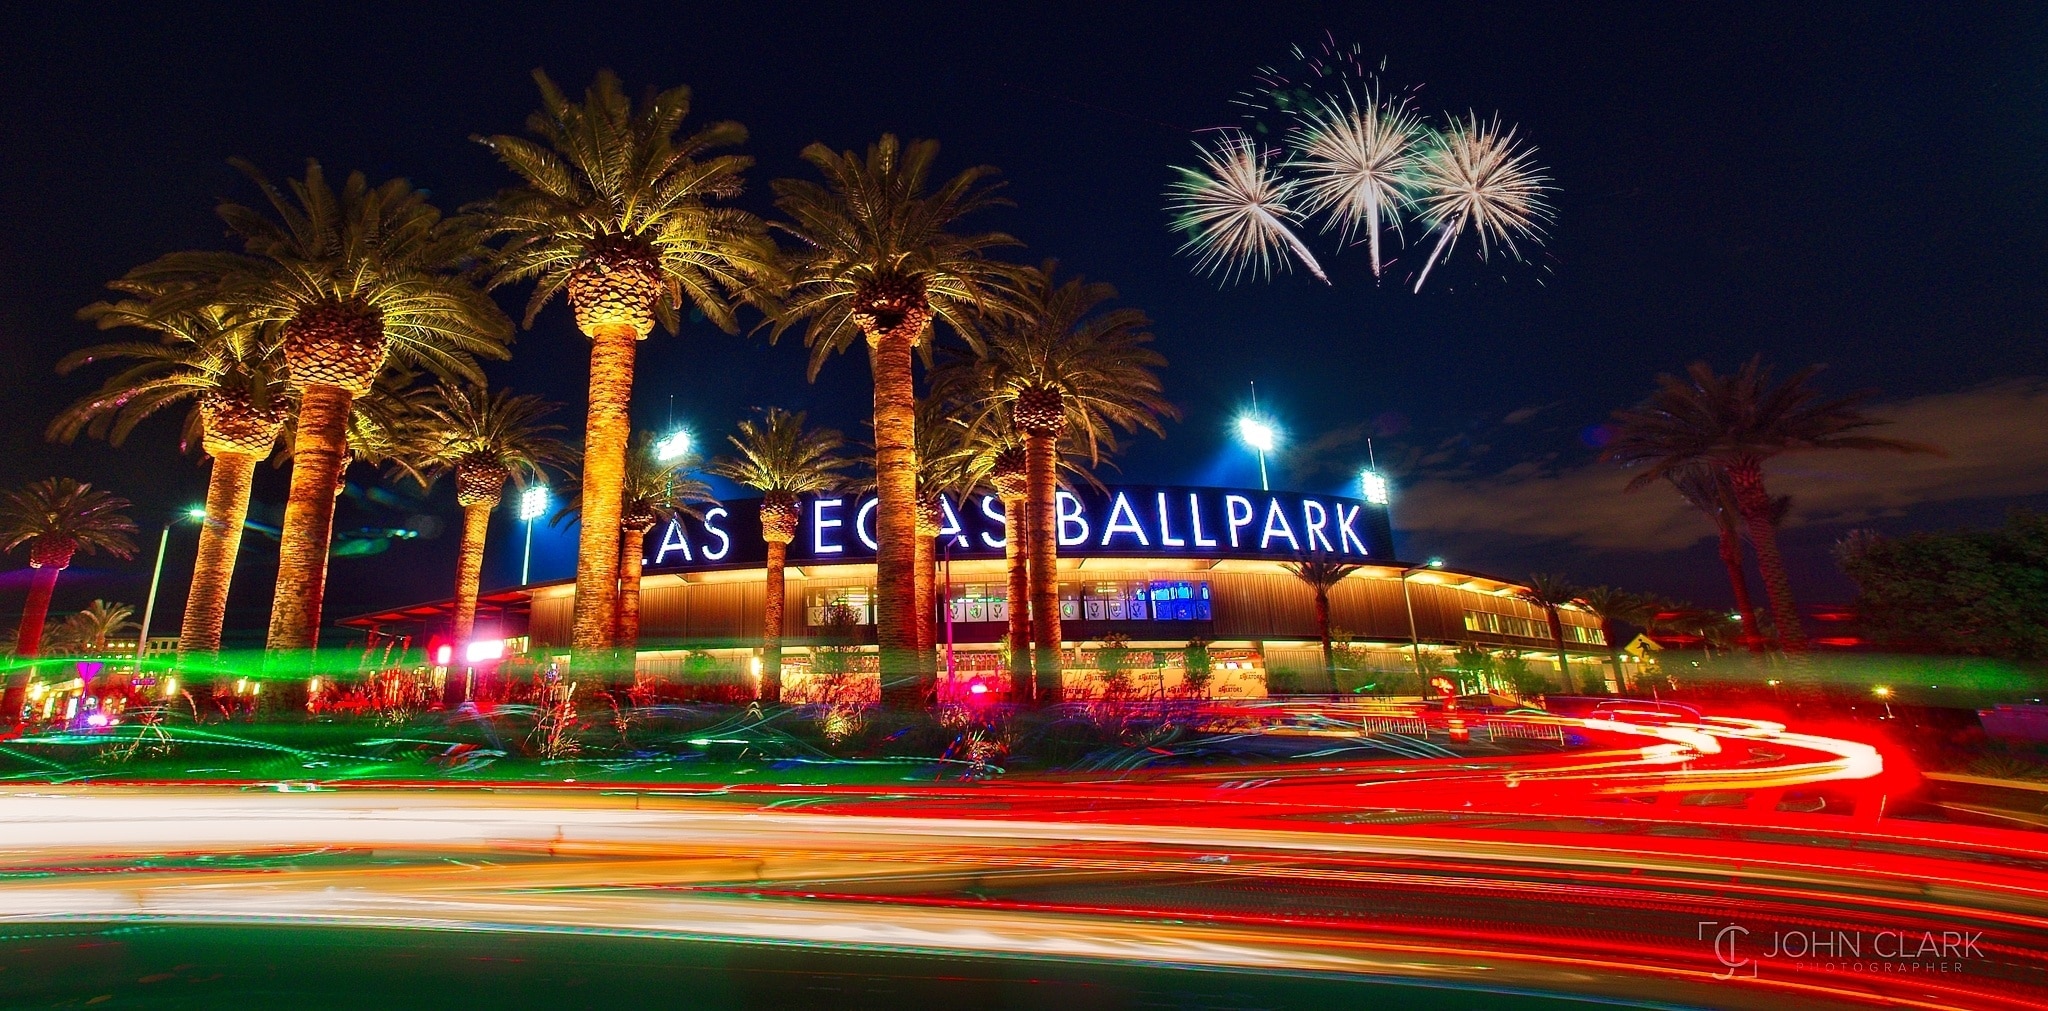 Las Vegas Ballpark - Summerlin  Be Part of Something Beautiful